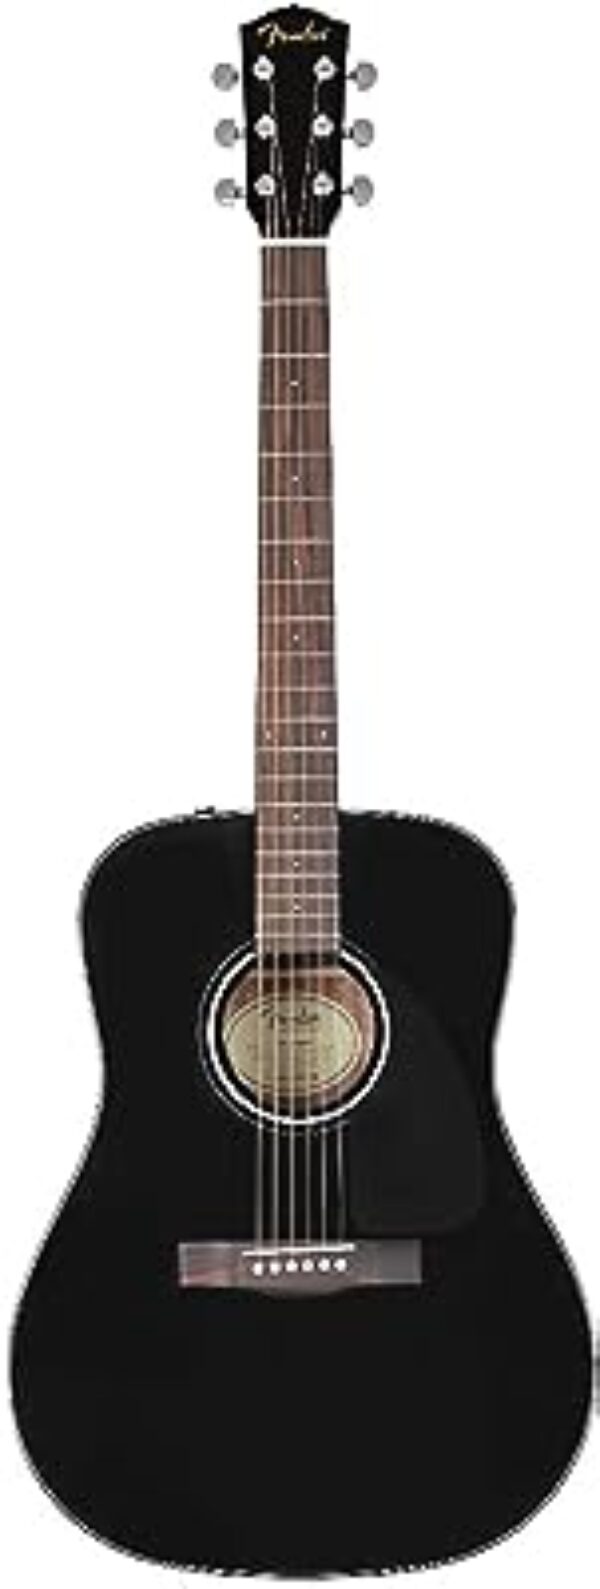 Fender CD60 V3 Acoustic Guitar Black